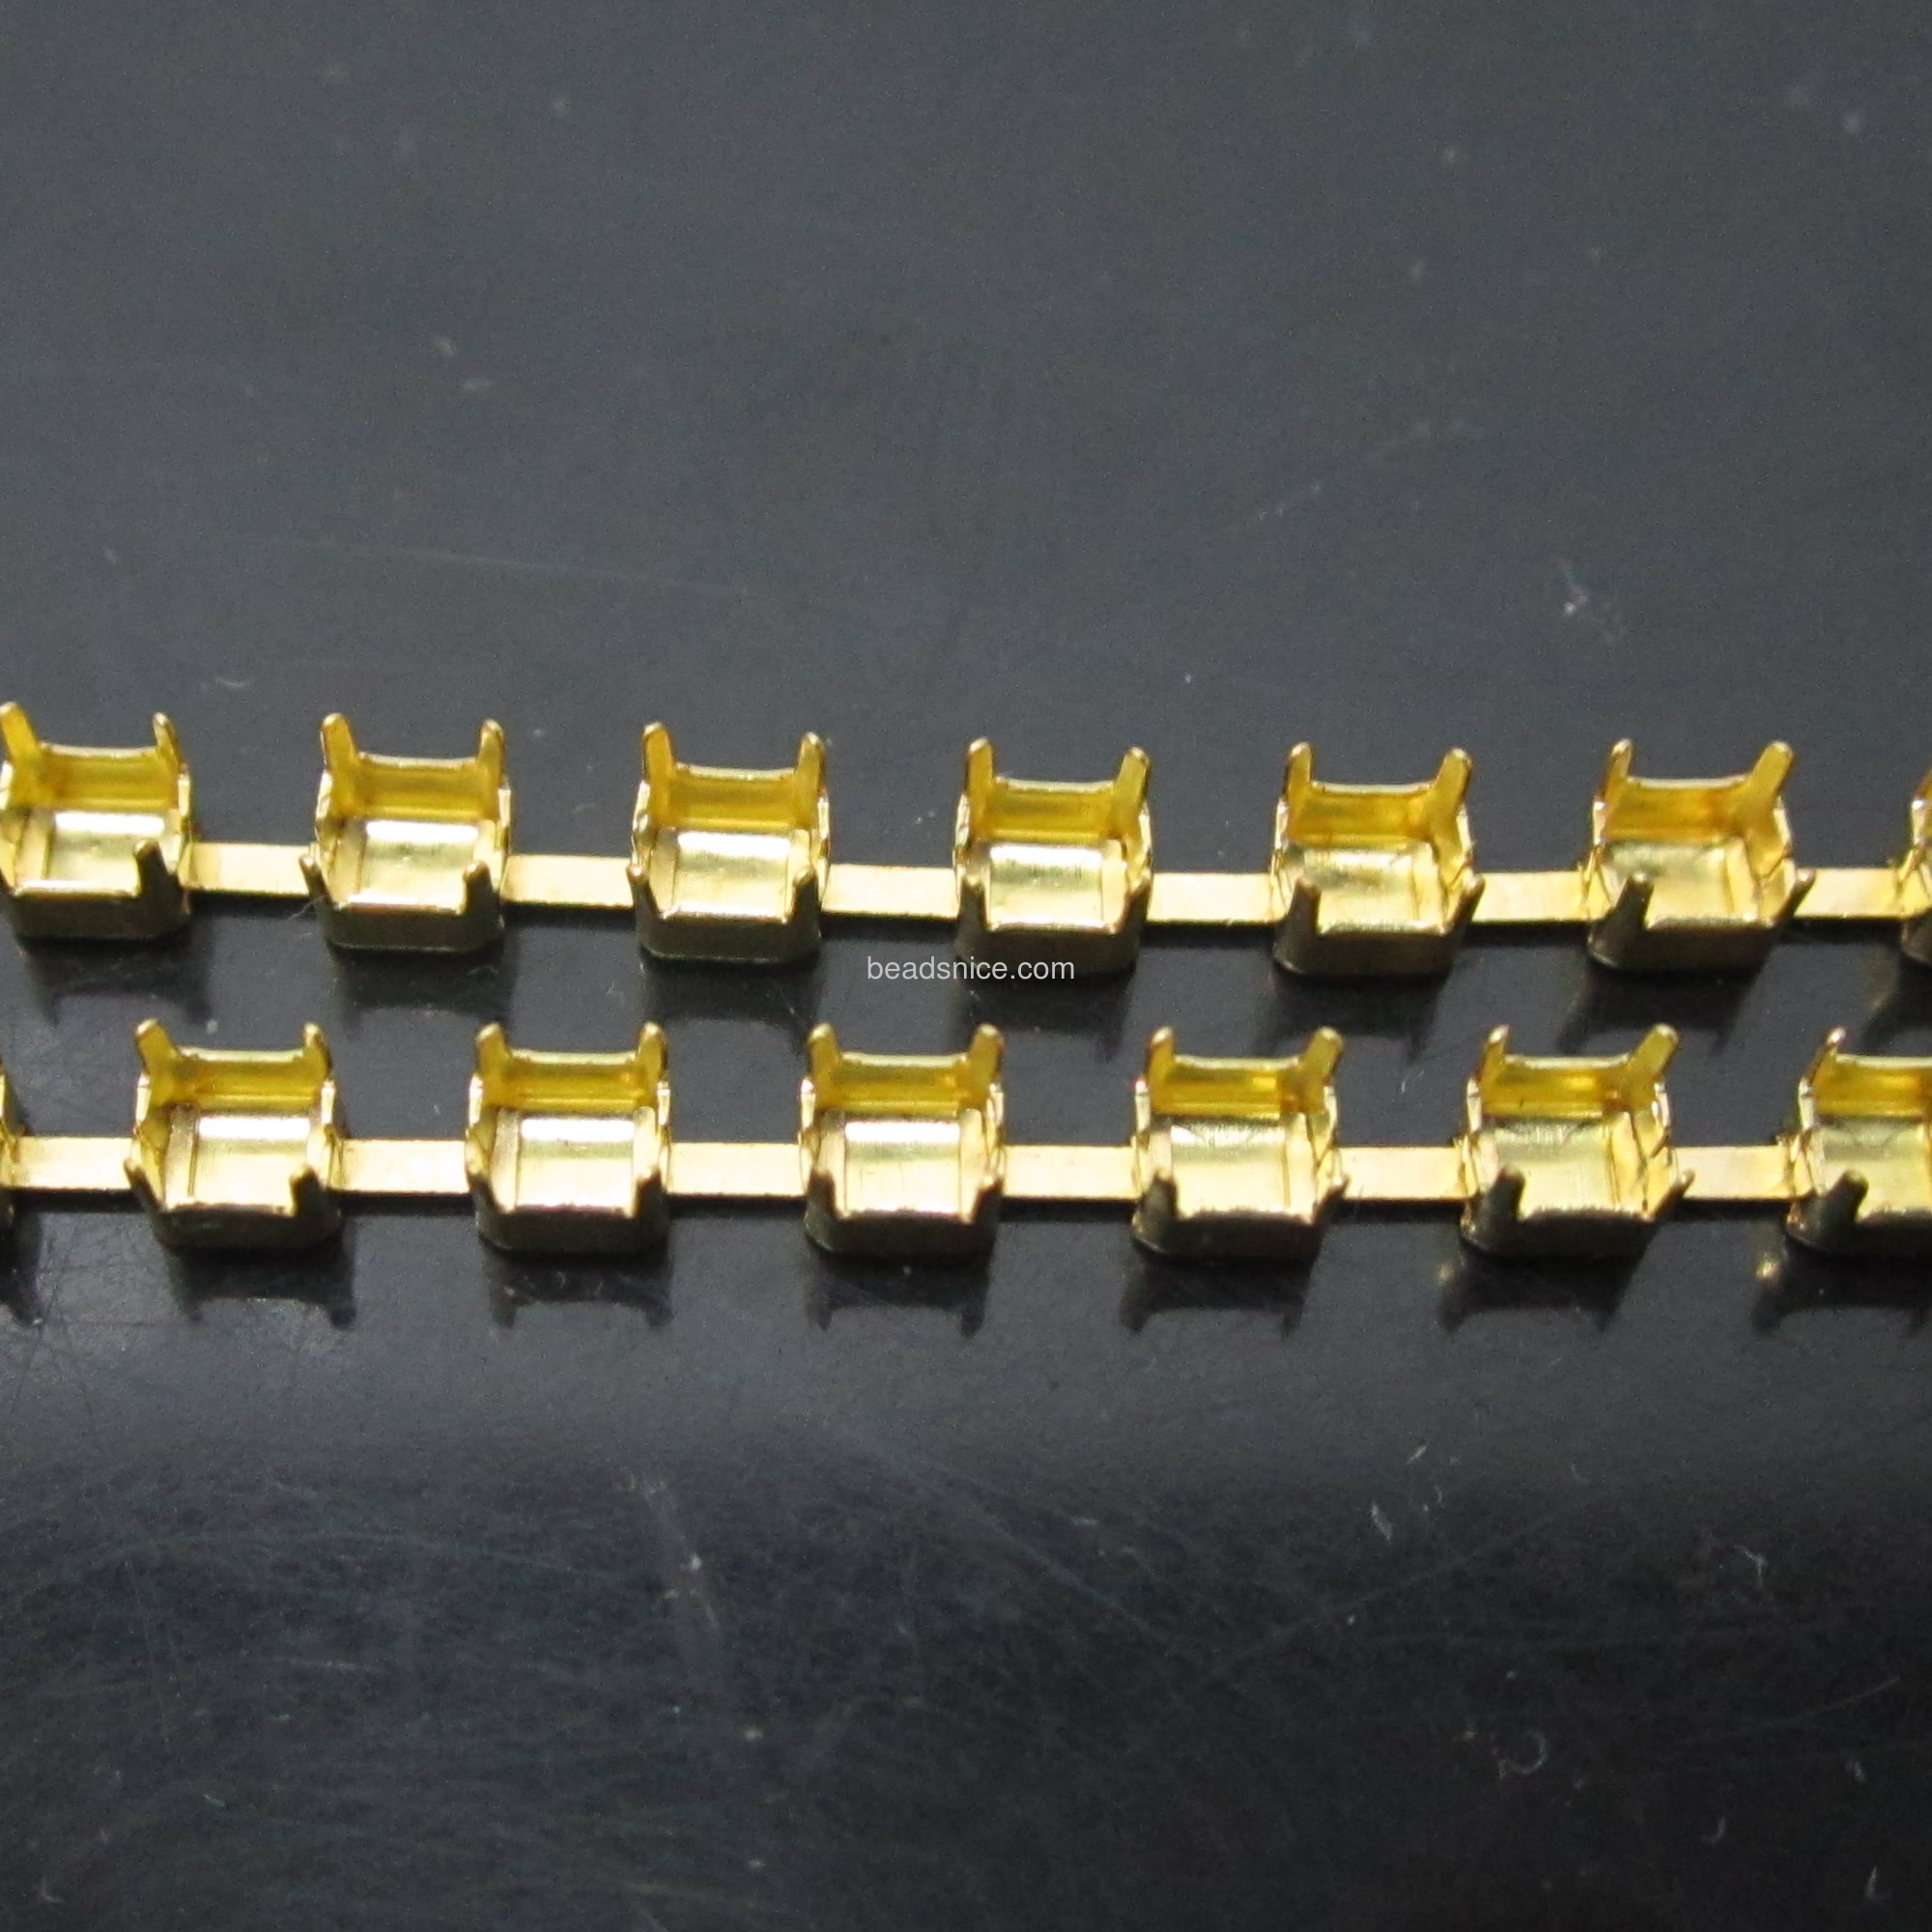 Brass rhinestone cup chain fit P8/P8.5/P9  crystals rhinestone